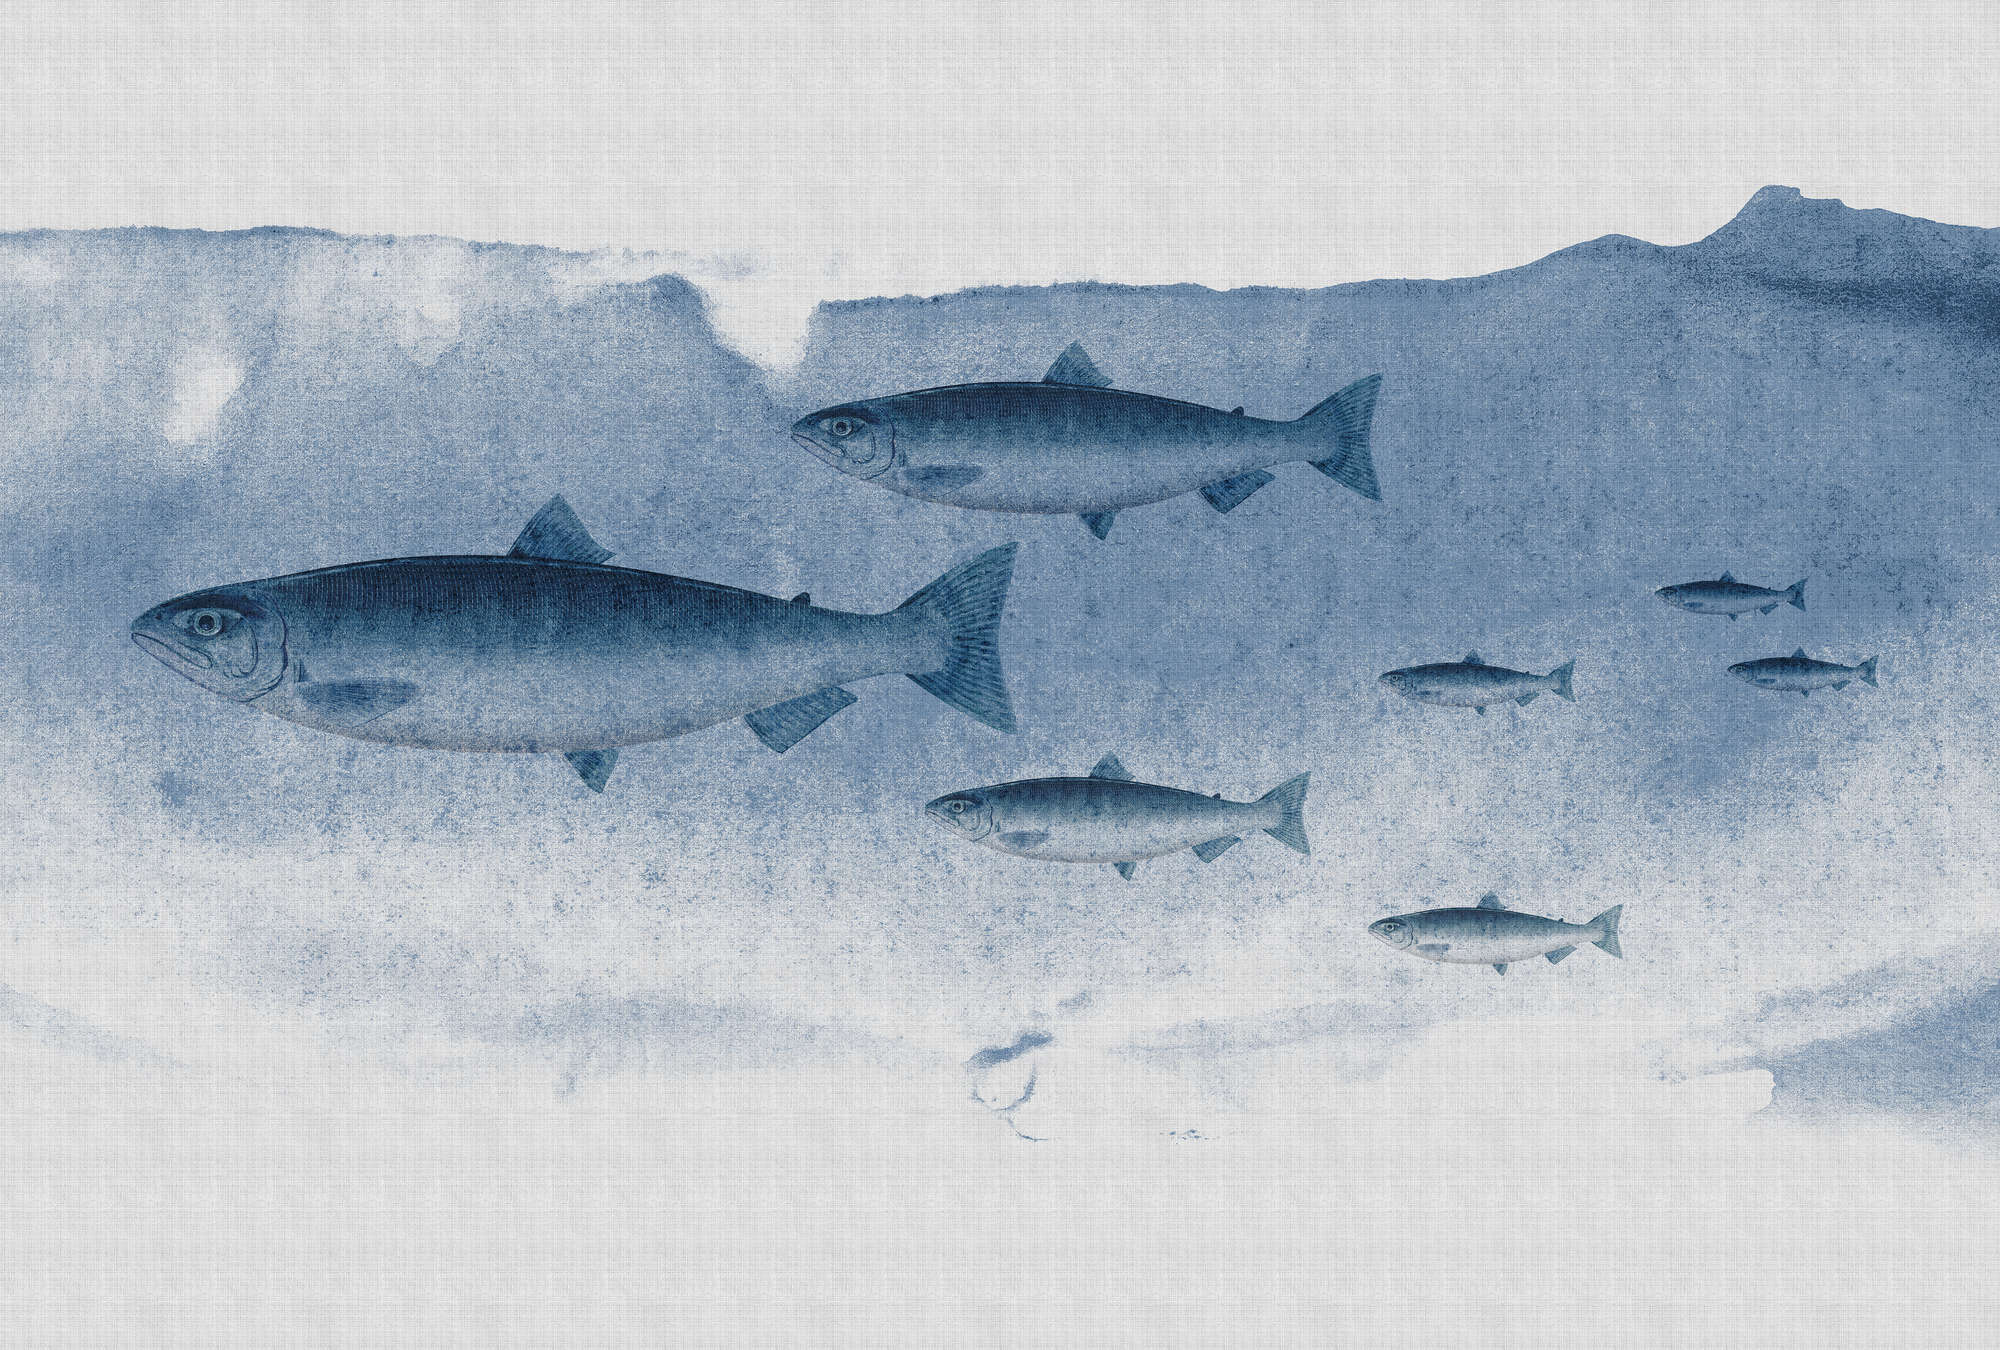             Into the blue 1 - Fisch Aquarell in Blau als Fototapete in naturleinen Struktur – Blau, Grau | Mattes Glattvlies
        